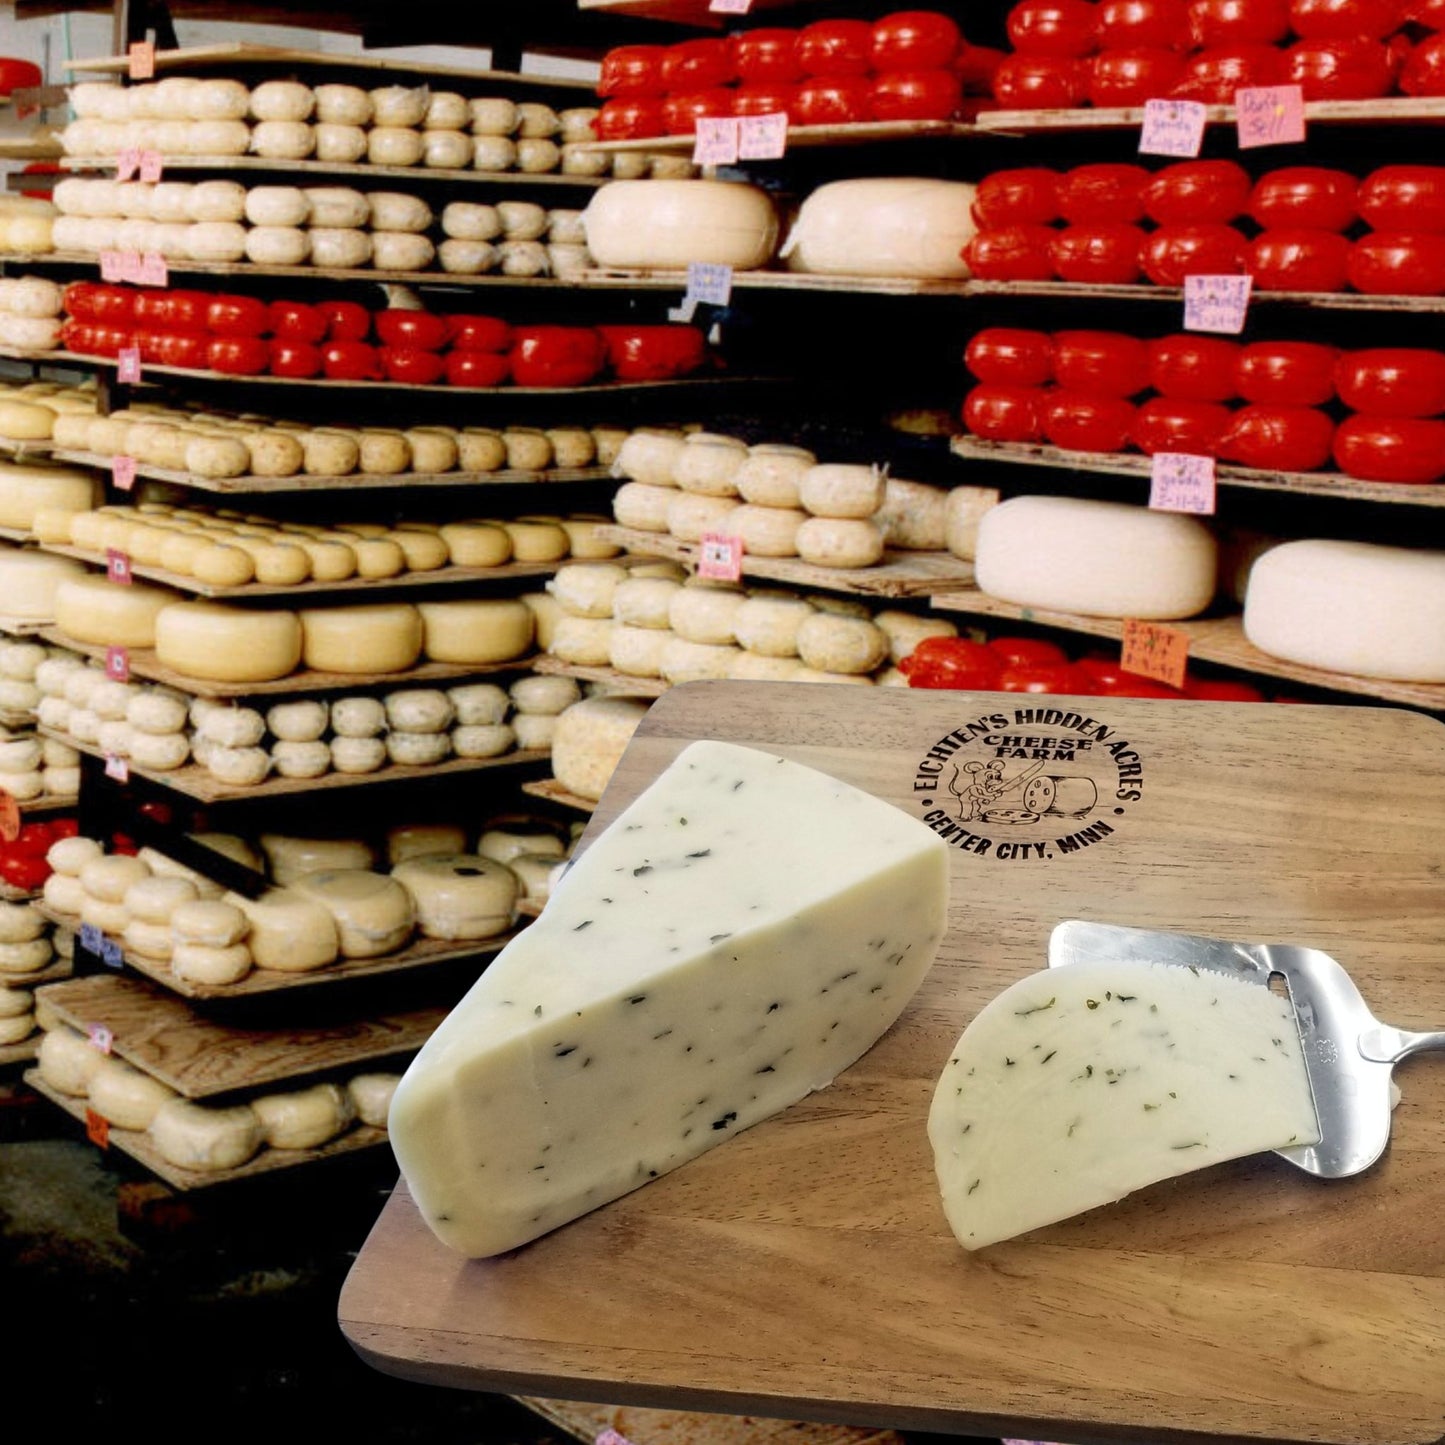 Eichtens Herb Gouda Cheese - Eichtens Cheeses, Gifts & FoodsAll Products